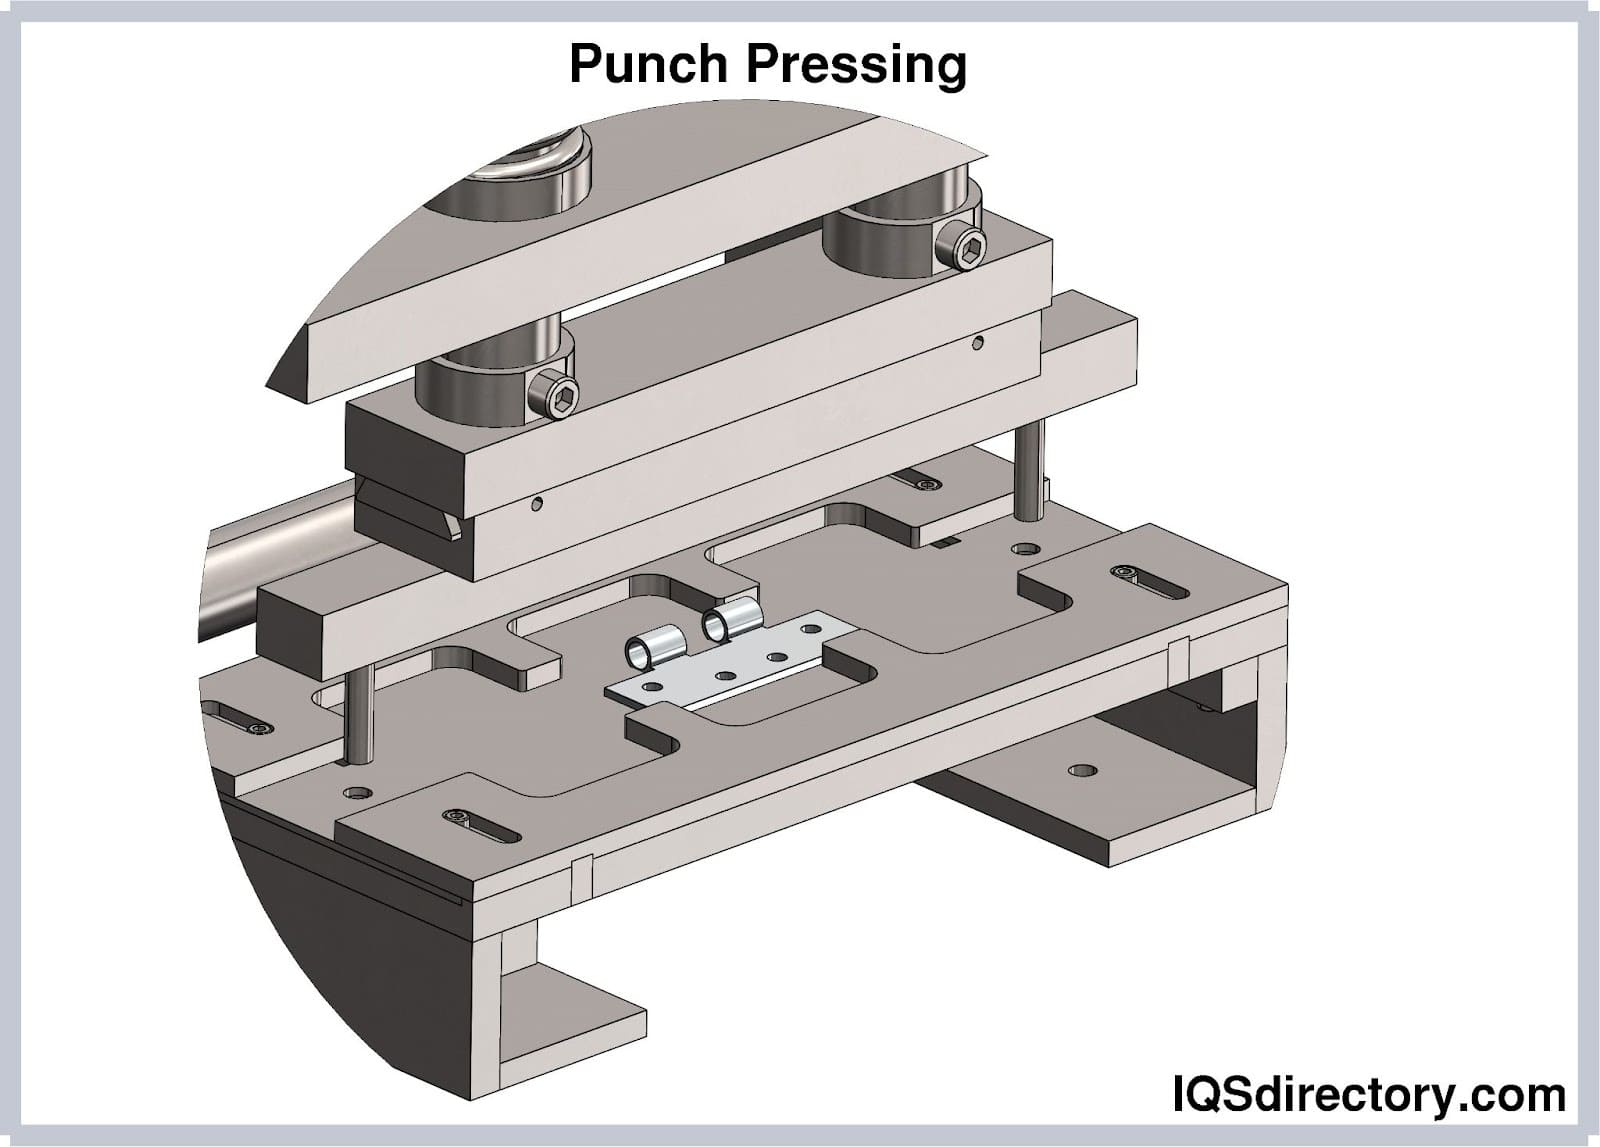 Punch Pressing